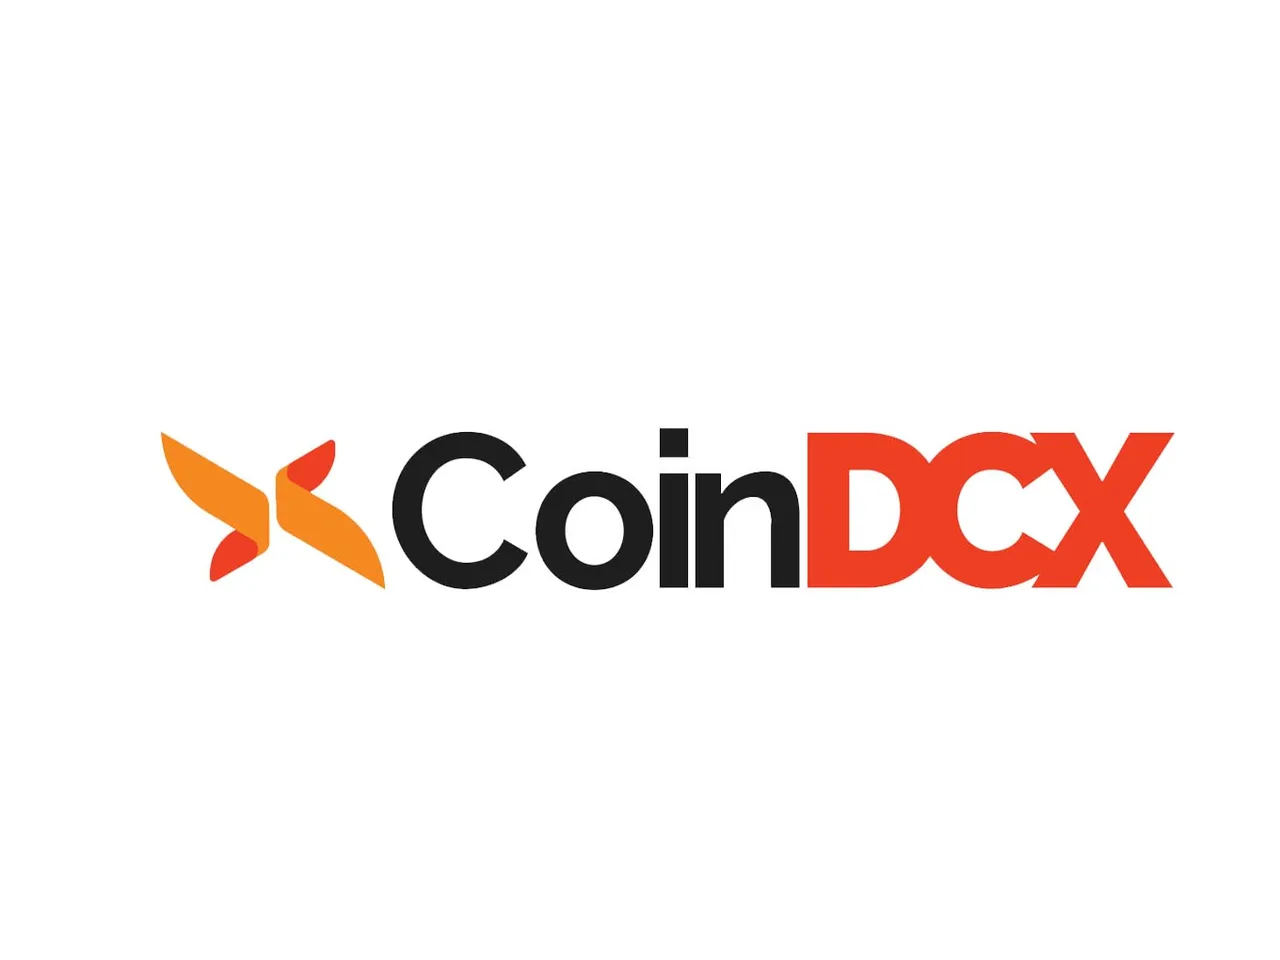 Crypto exchange CoinDCX to raise $100-120M funding, says report